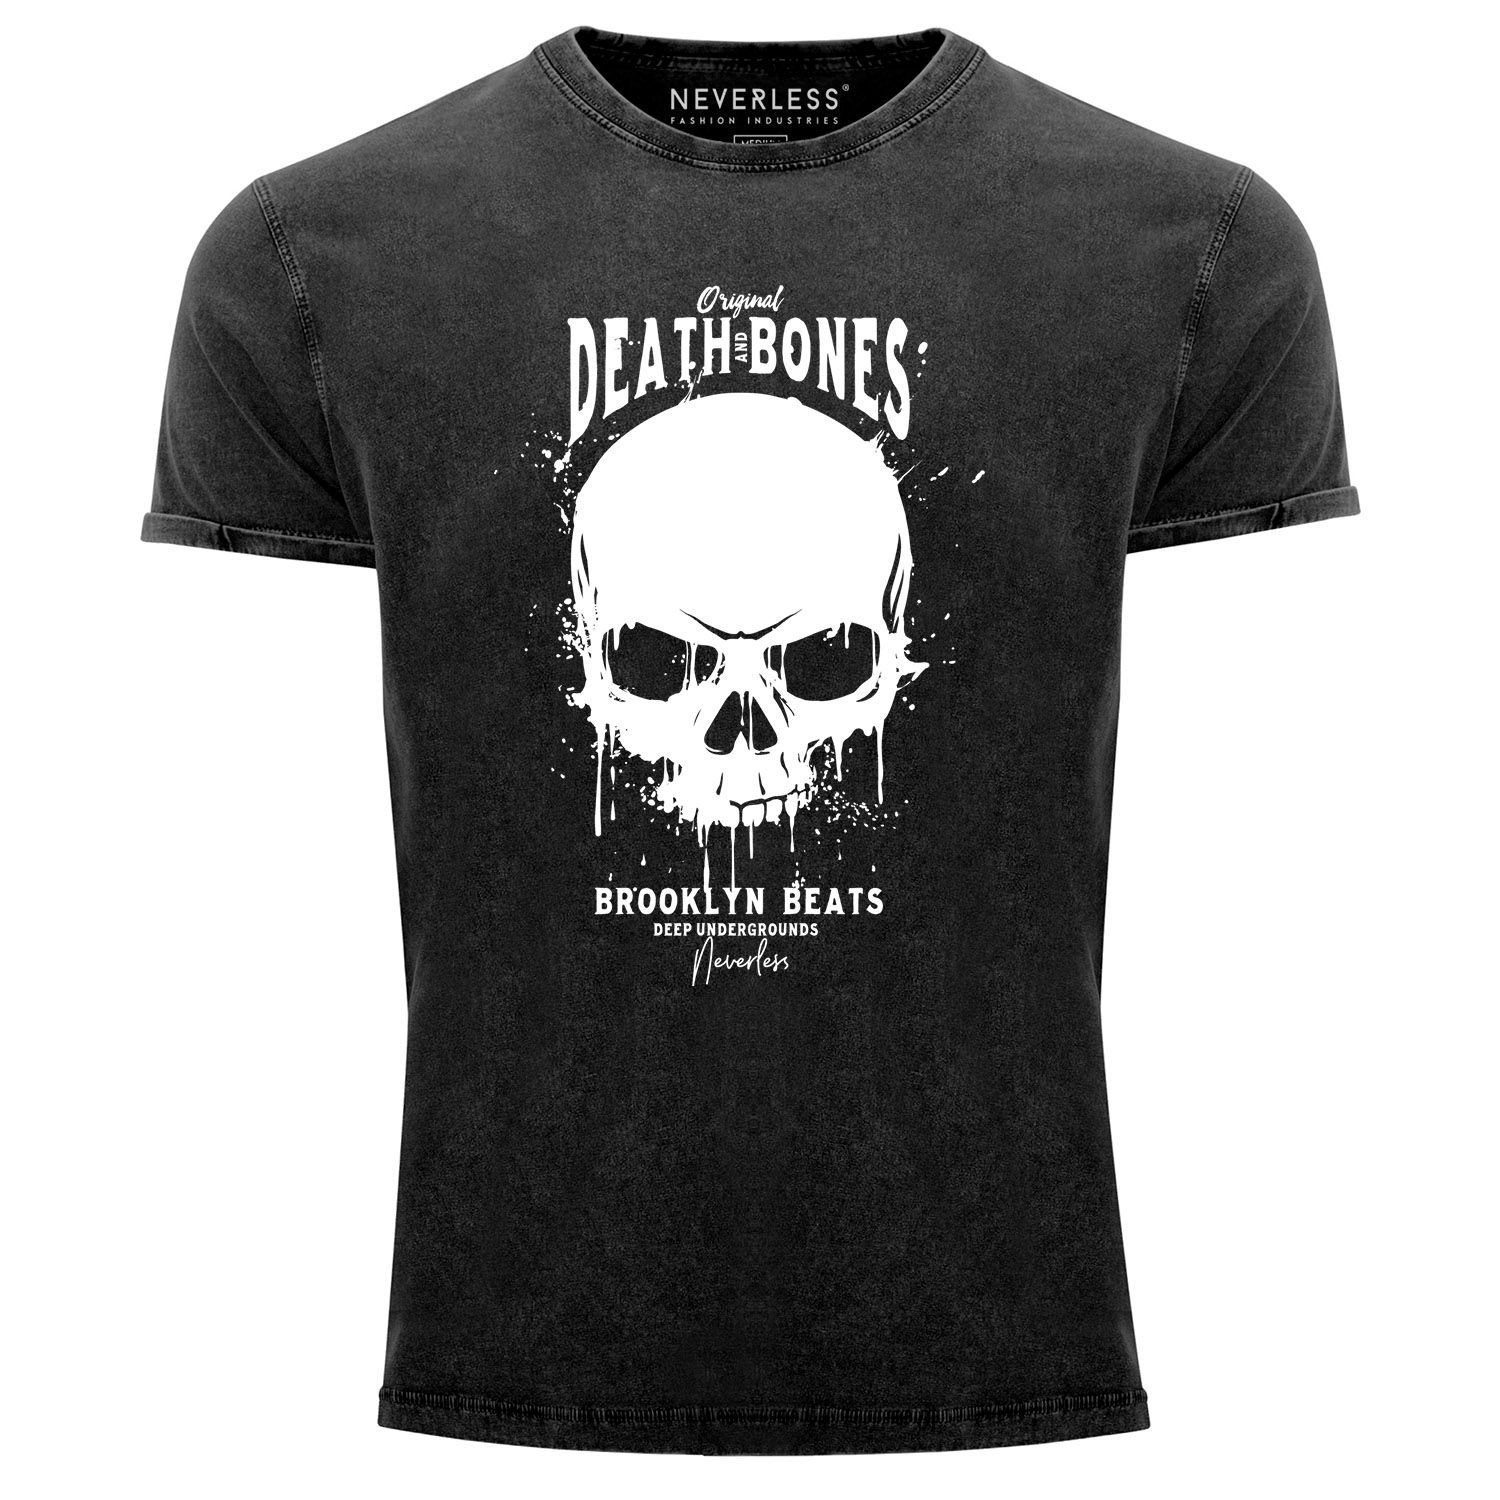 Neverless Print-Shirt Neverless® Herren T-Shirt Vintage Shirt Printshirt Skull Death and Bones Totenkopf Club Outfit Used Look Slim Fit mit Print schwarz